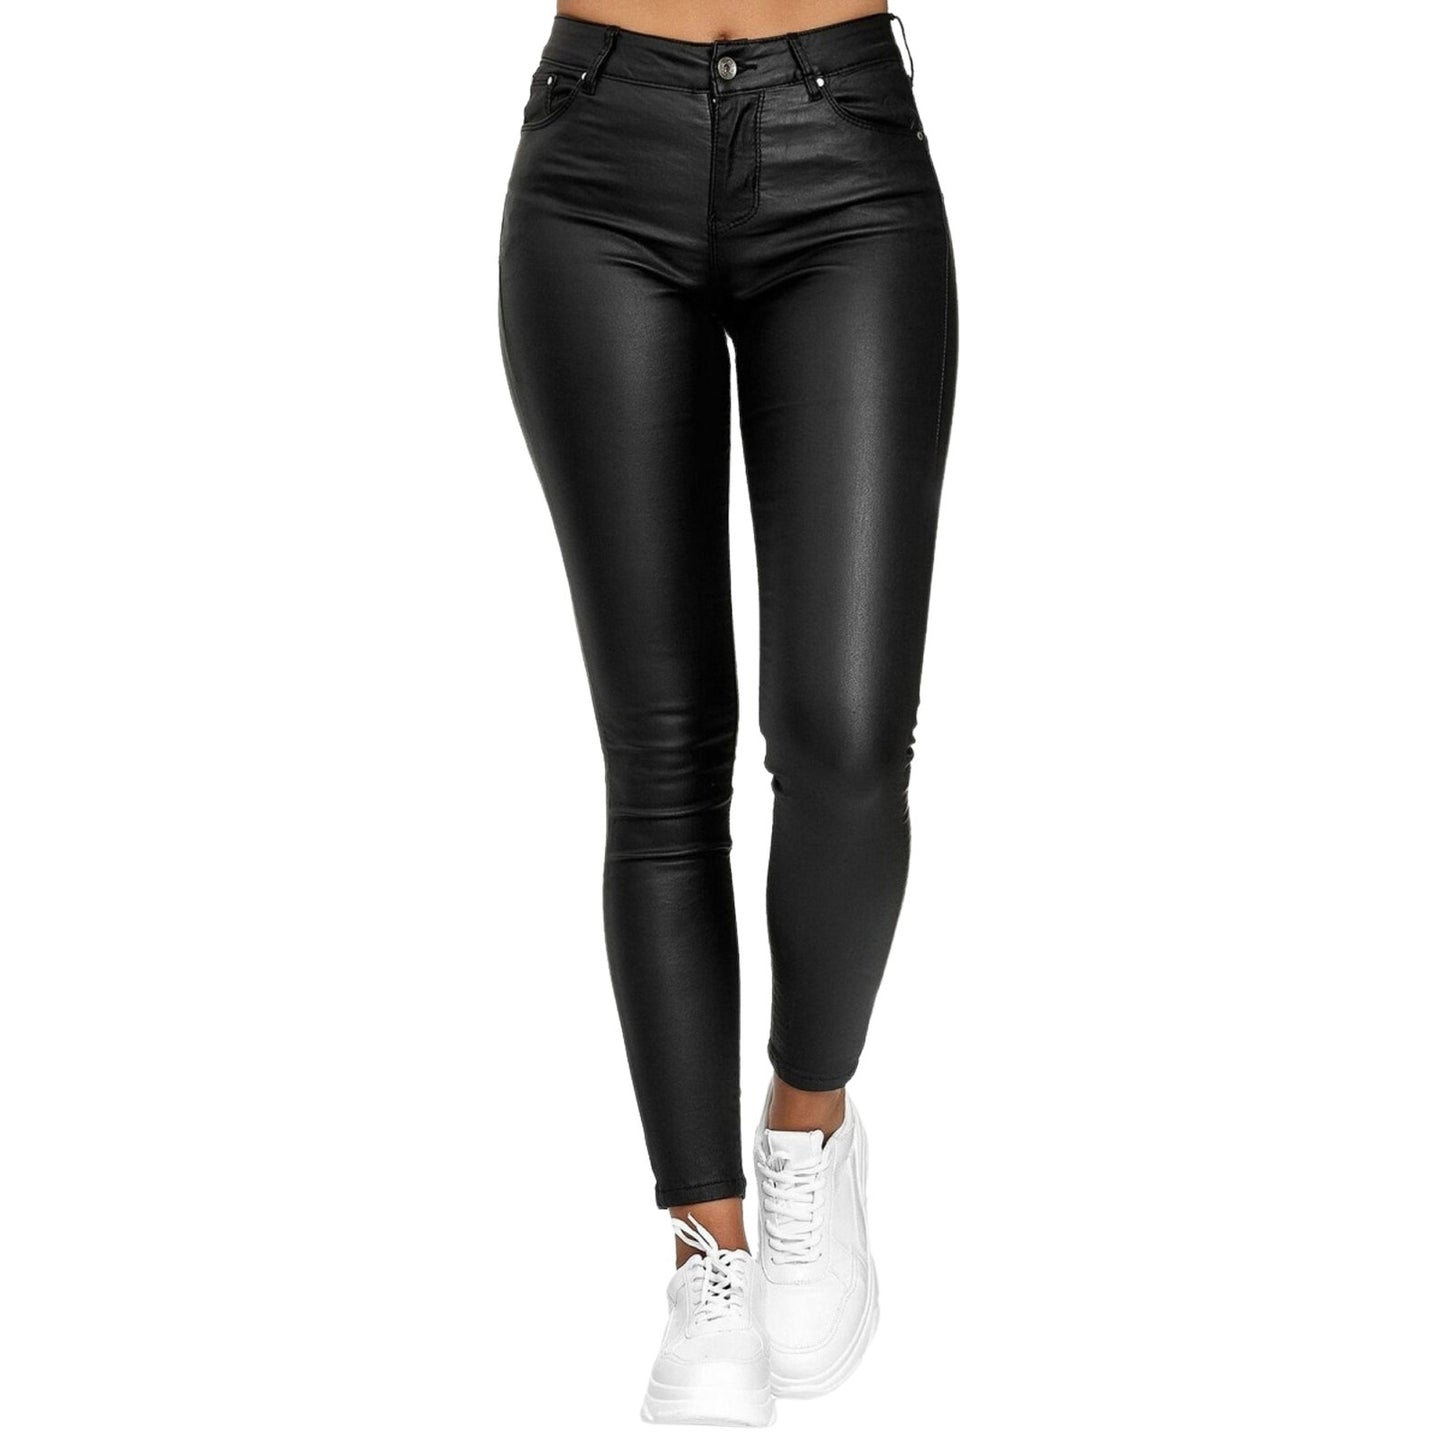 New European and American Women's Casual Pants Leggings PU Leather Pants